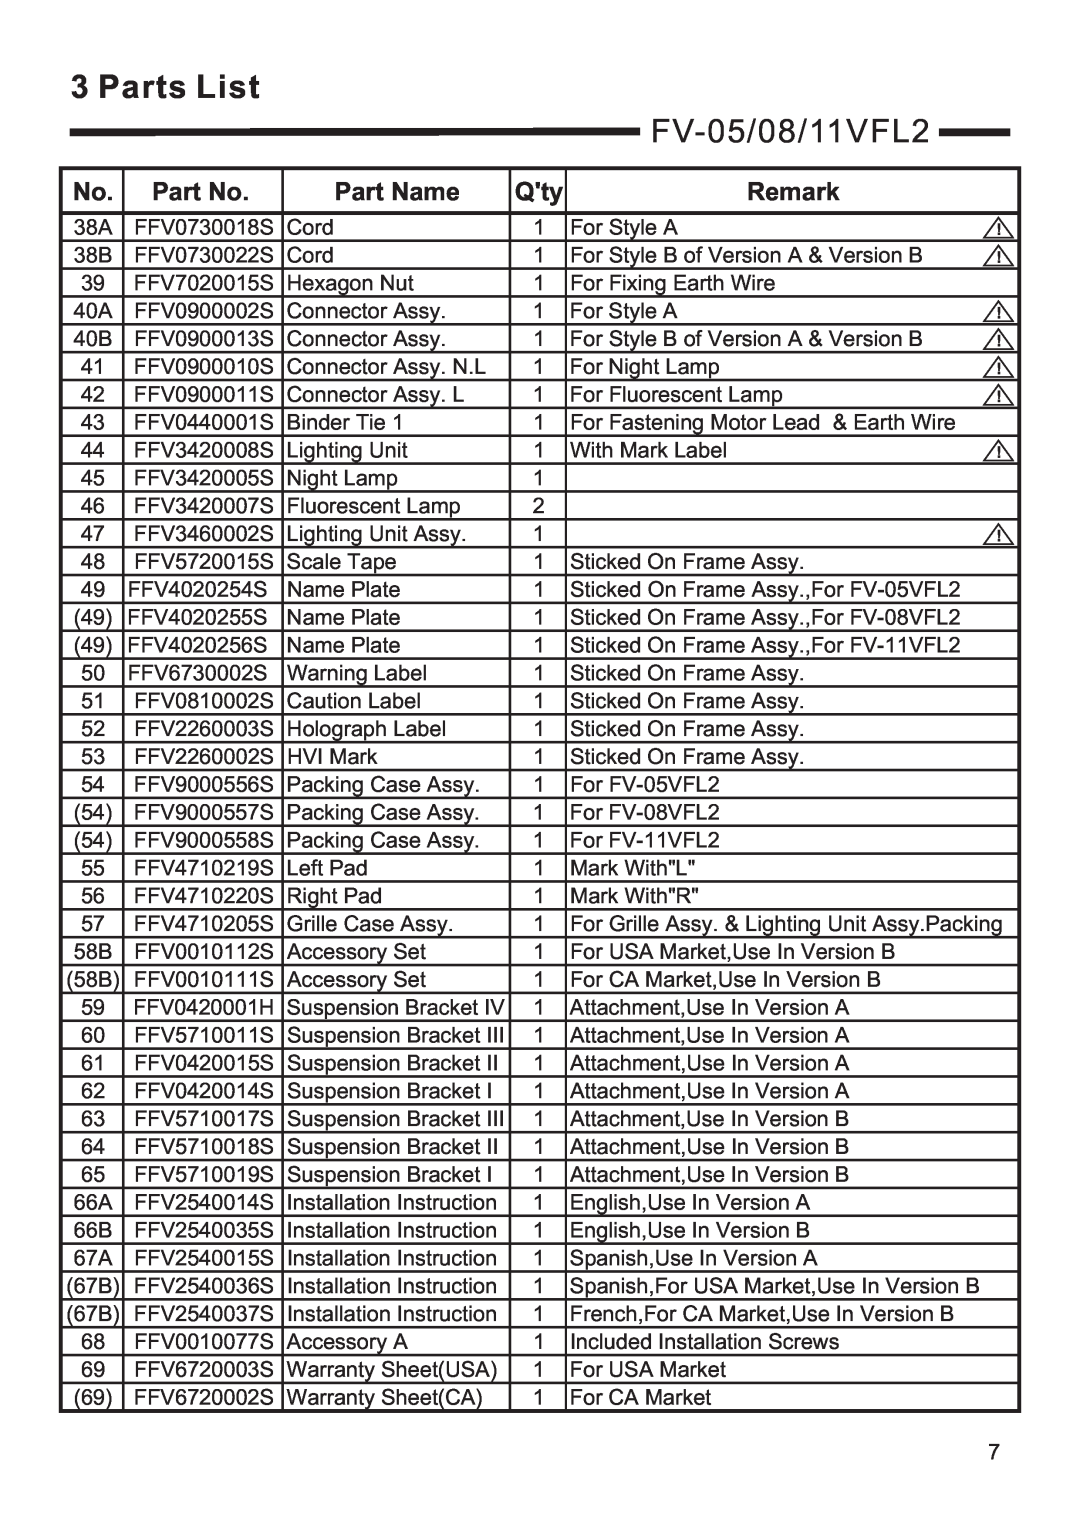 Panasonic FV-05/08/11VFL2 service manual Parts List, Part Name, Remark 